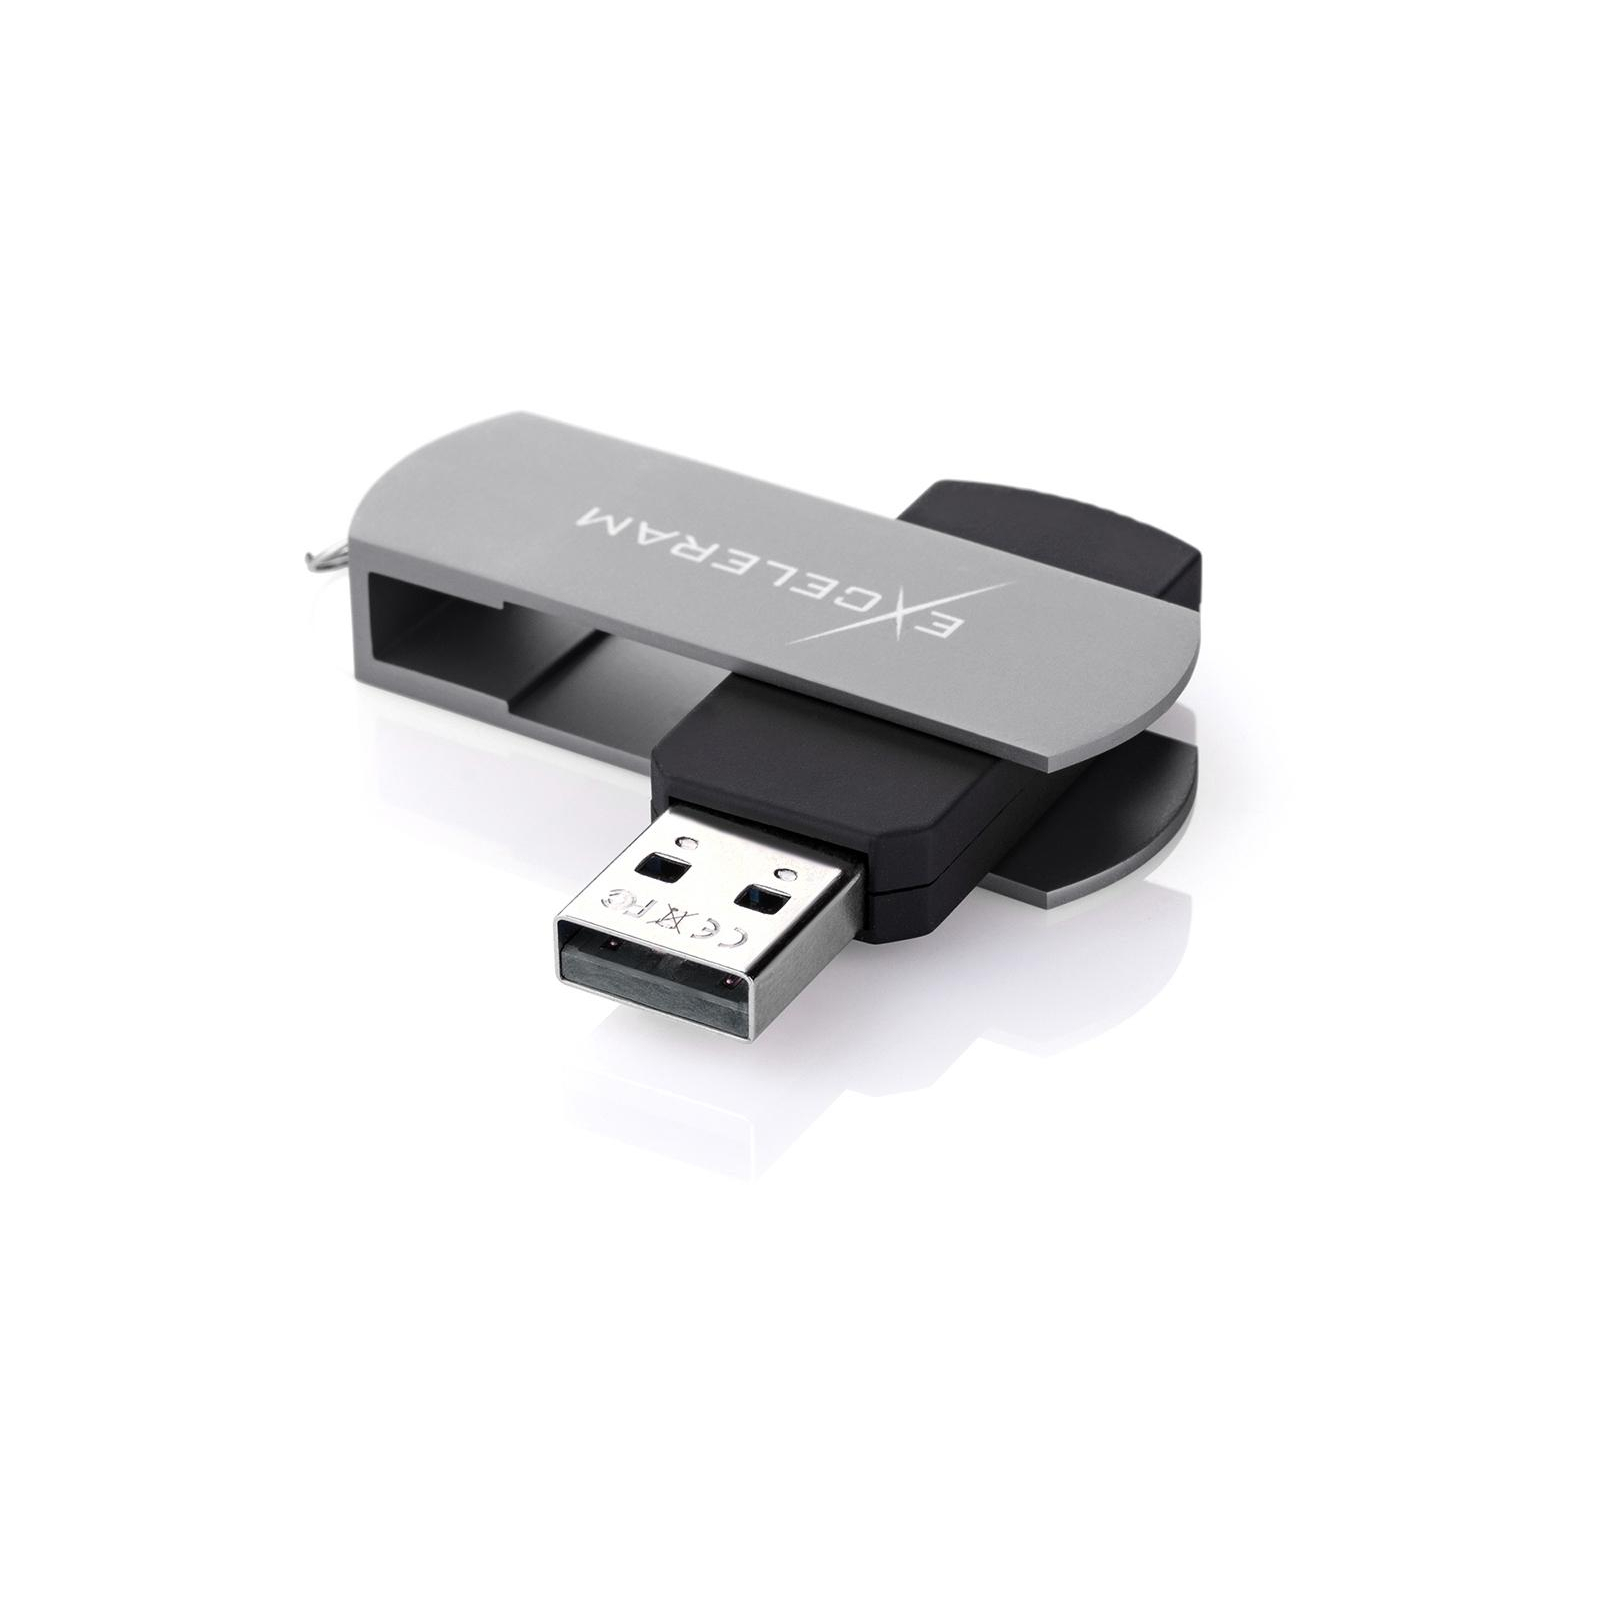 USB флеш накопитель eXceleram 32GB P2 Series Gray/Black USB 2.0 (EXP2U2GB32) изображение 2